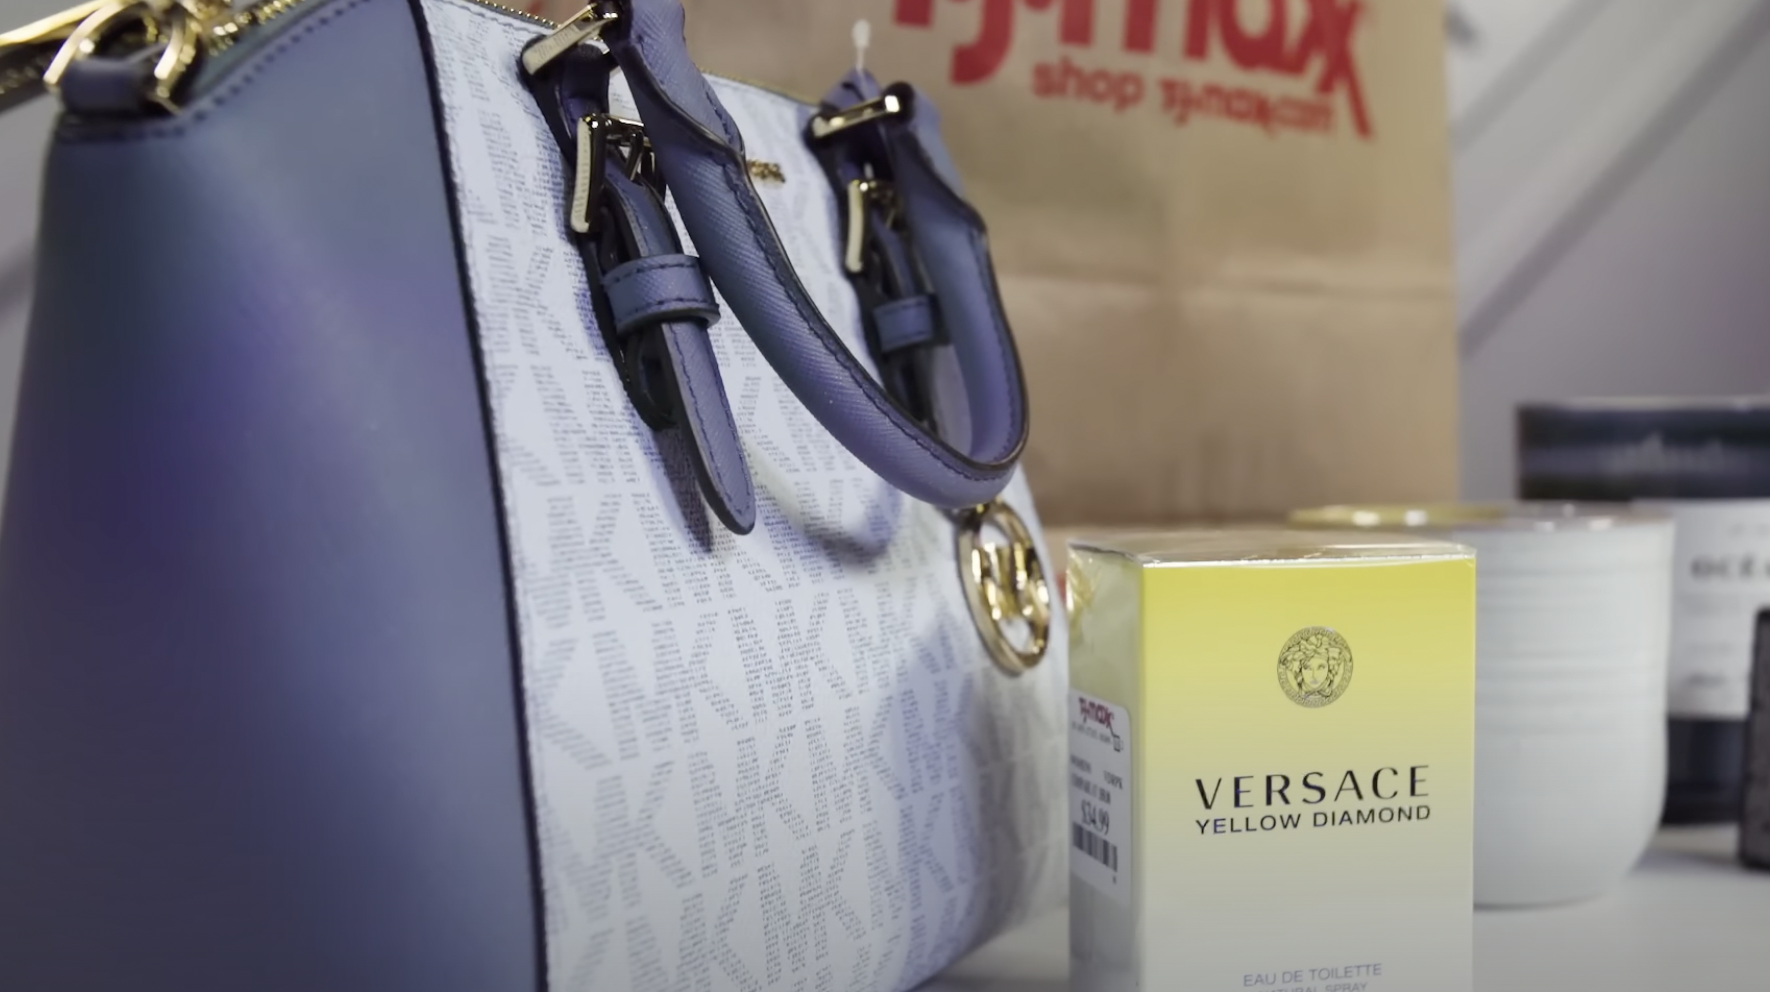 tj maxx purse MK and versage perfume